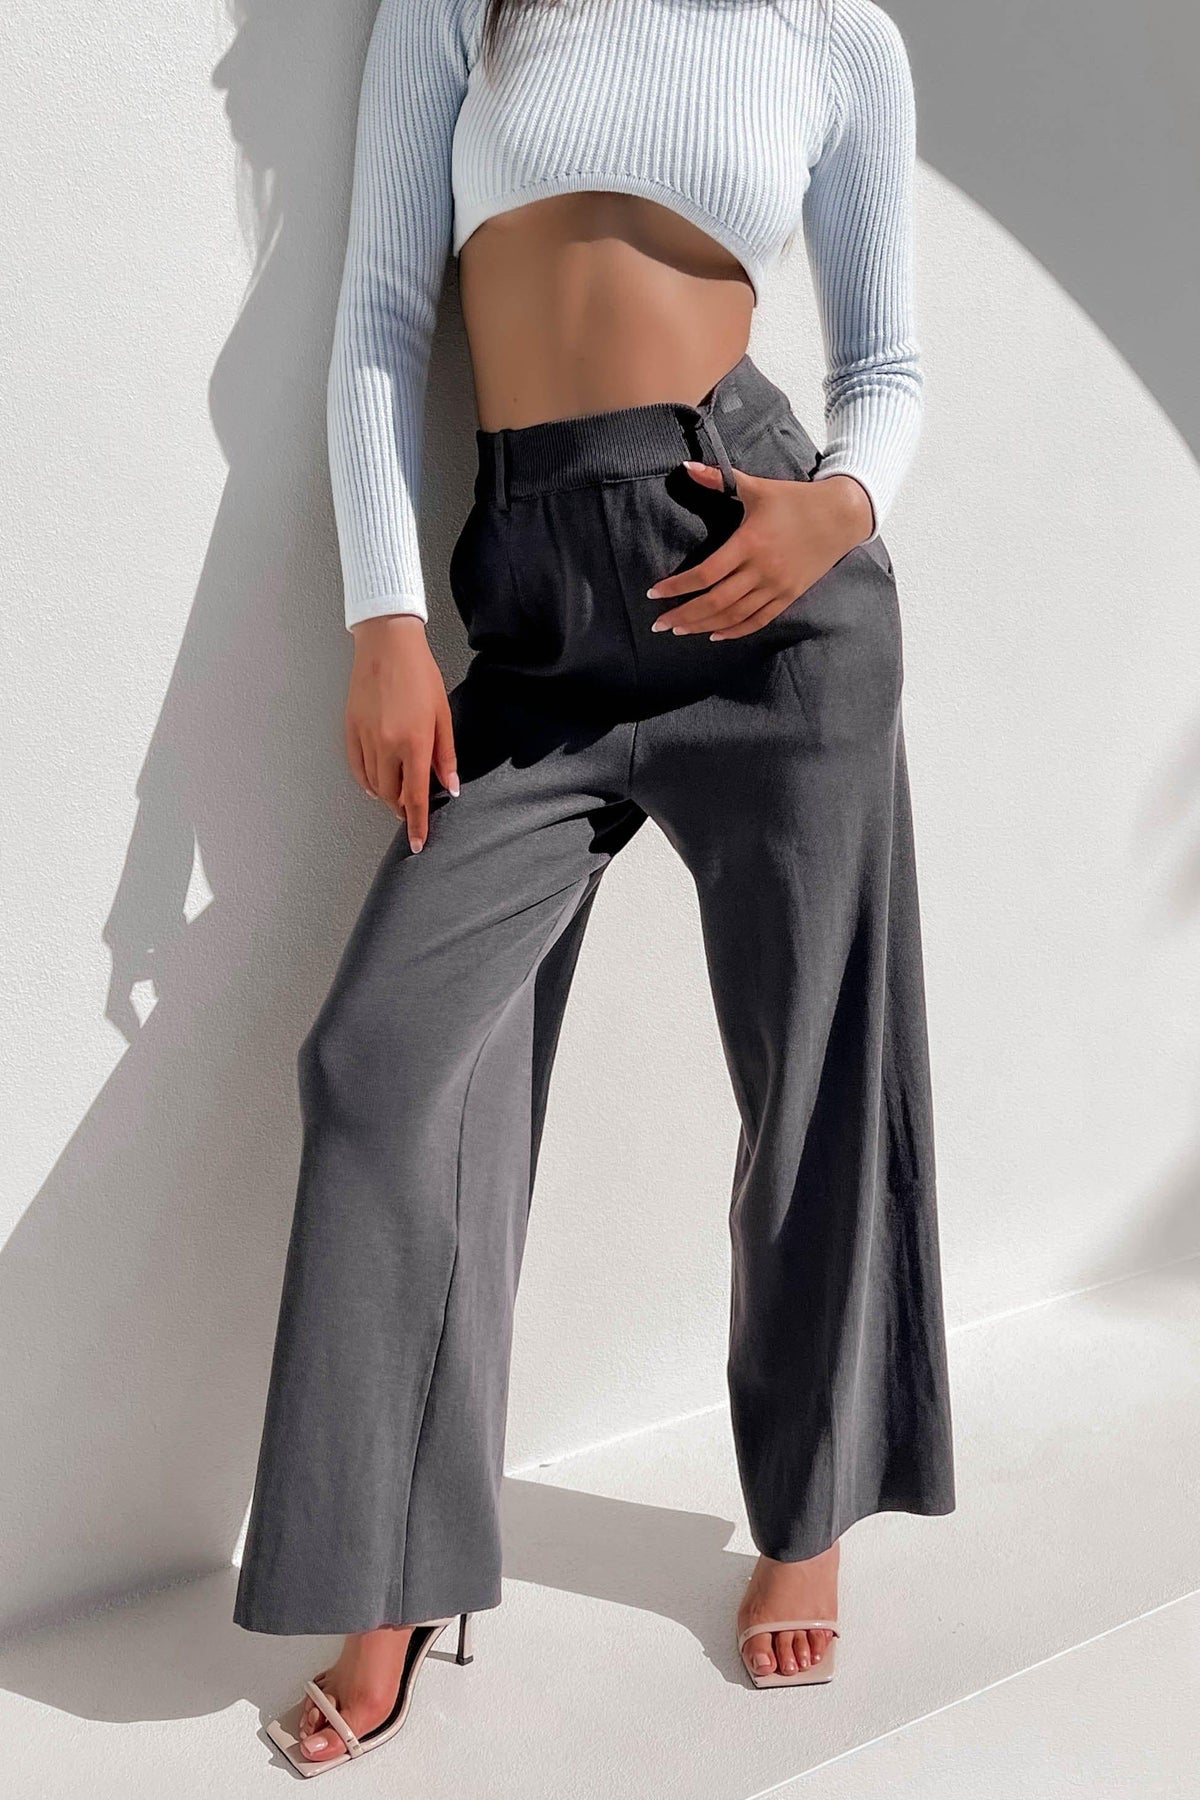 Foebe Pants, BASICS, BOTTOMS, ELASTANE, GREY, NYLON, PANTS, VISCOSE, , Our New Foebe Pants is only $60.00-We Have The Latest Pants | Shorts | Skirts @ Mishkah Online Fashion Boutique-MISHKAH